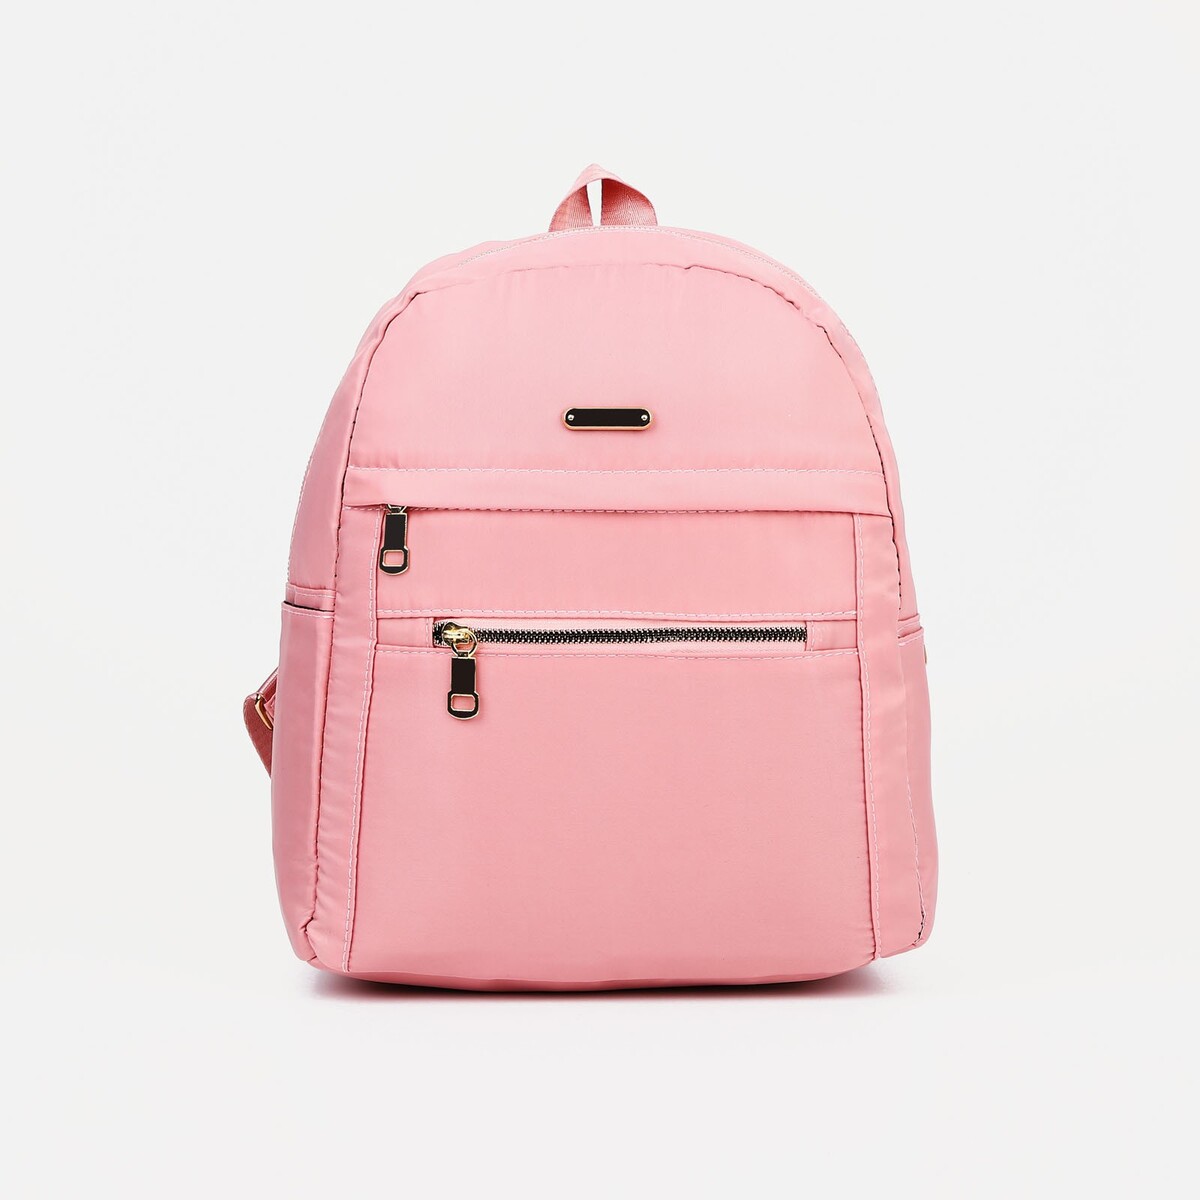 Рюкзак на молнии, цвет розовый, No brand